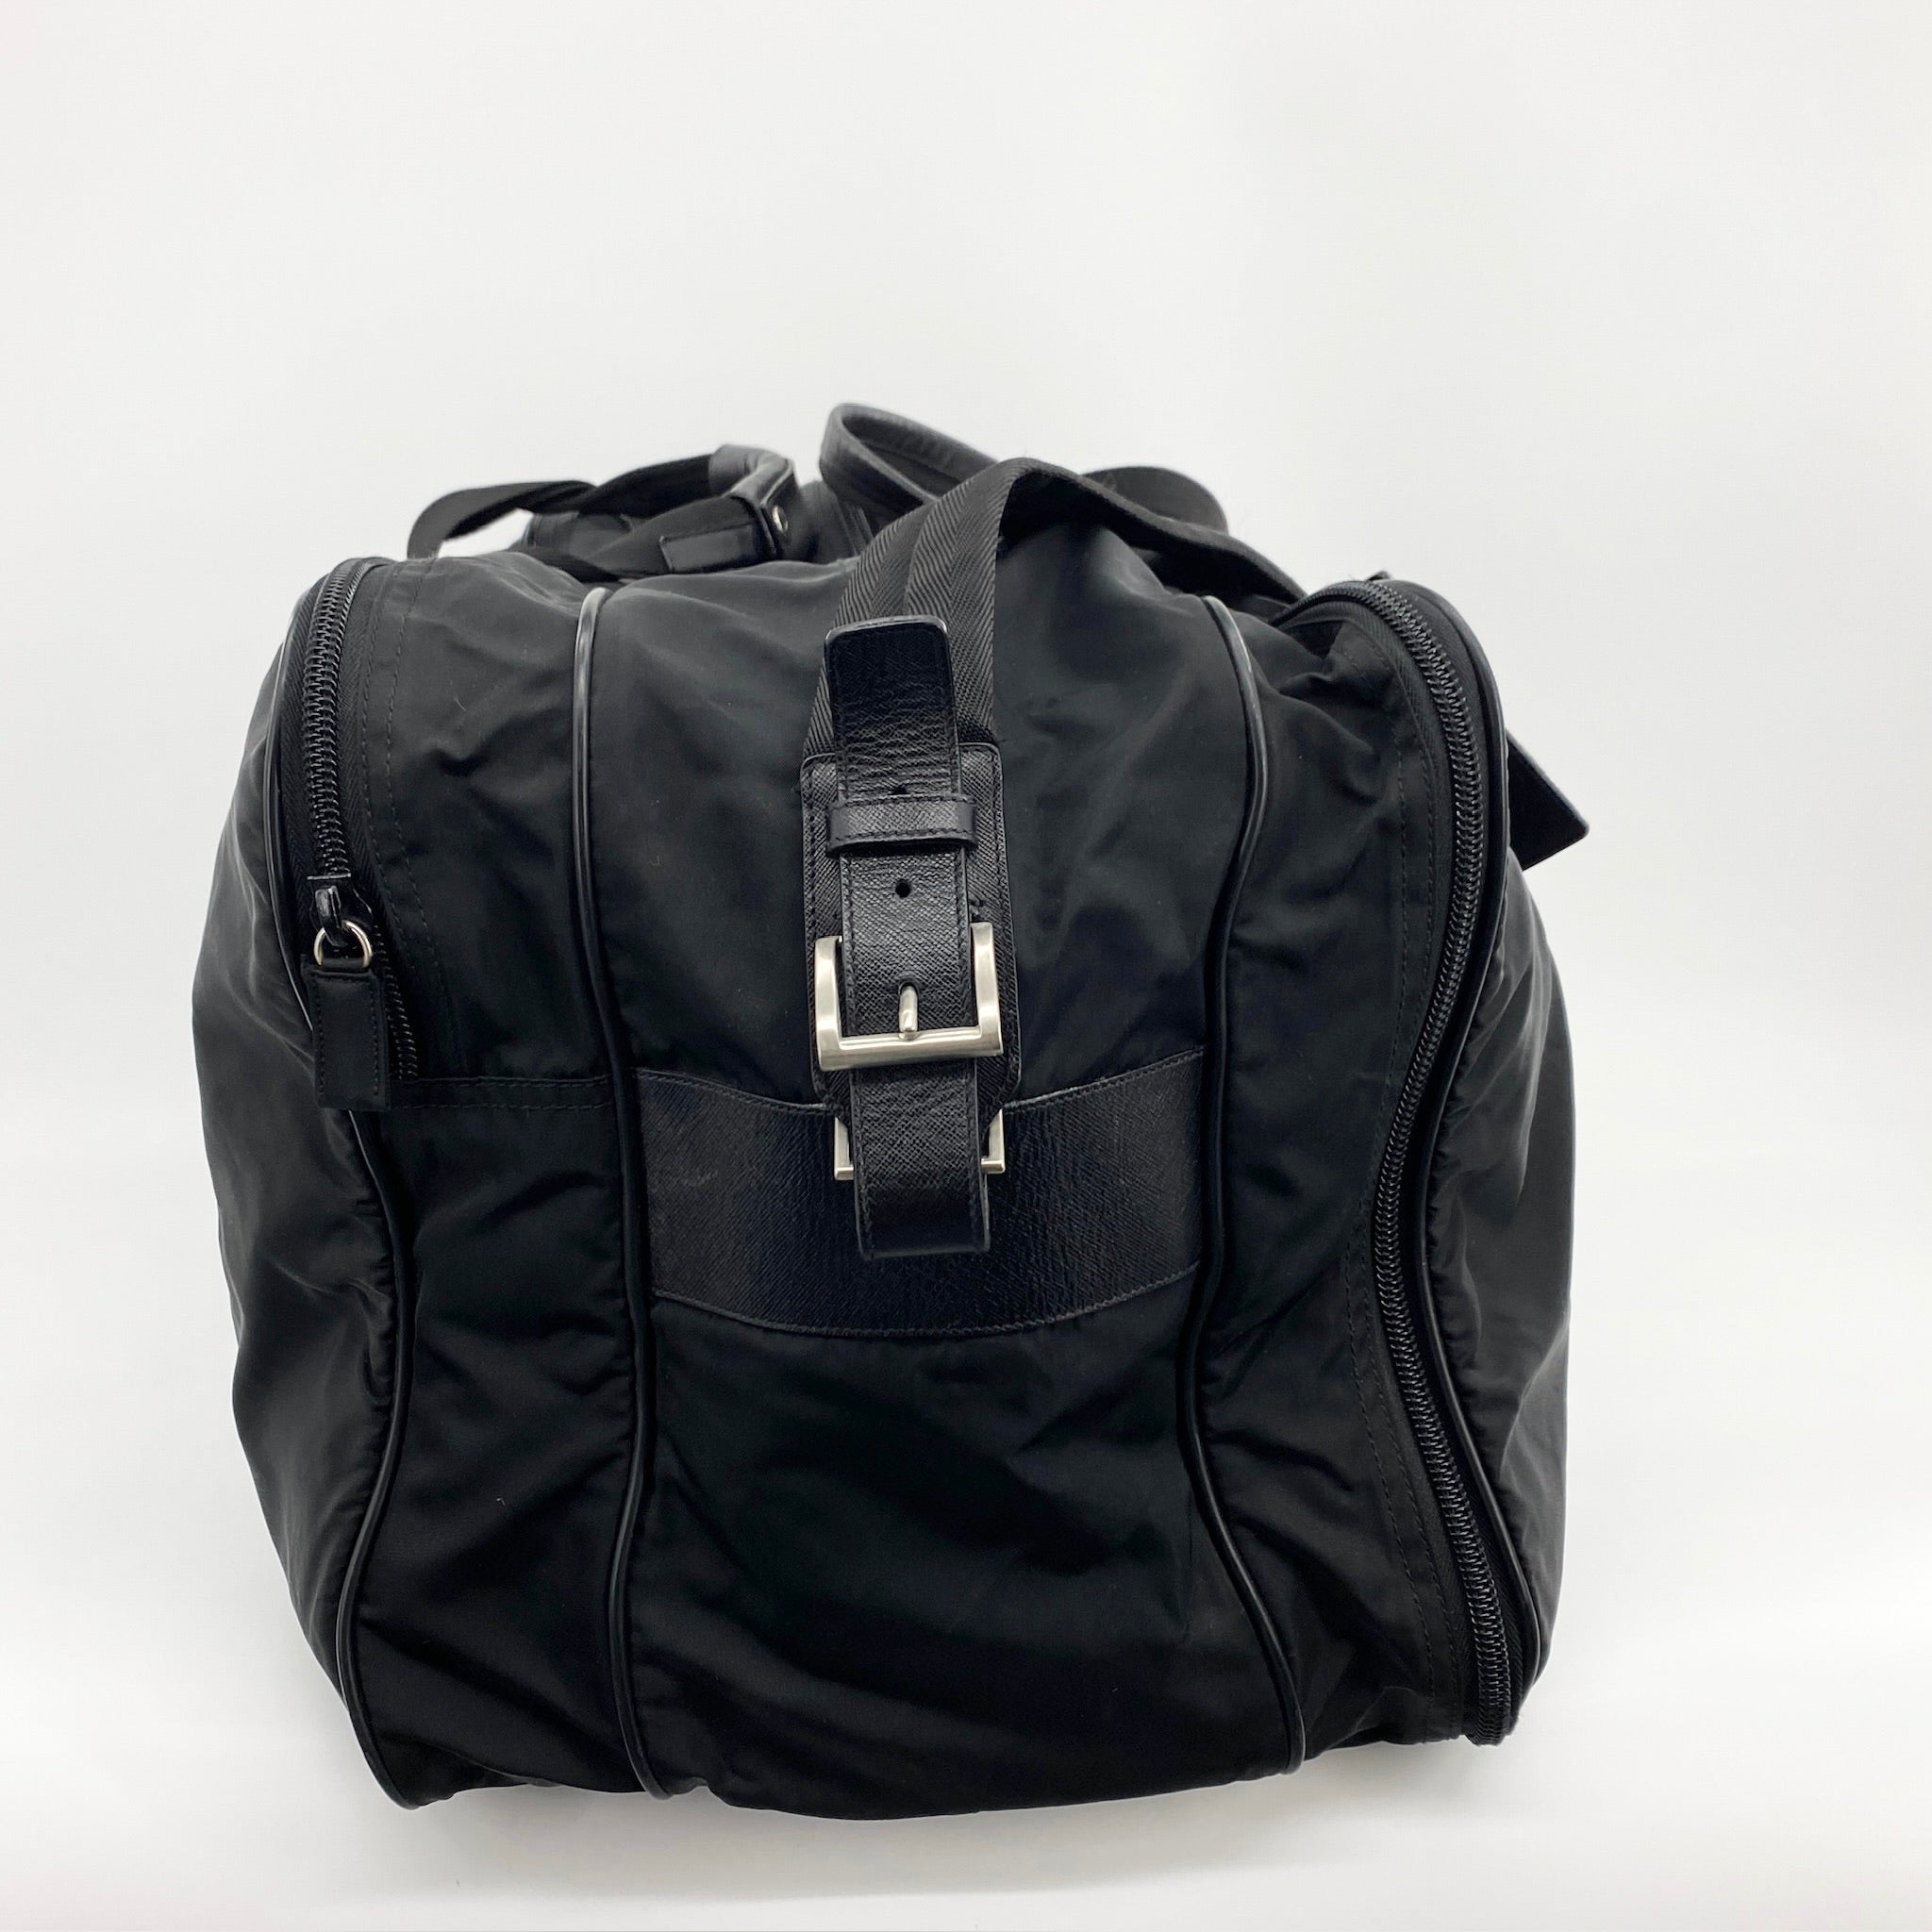 Nylon Boston Travel Bag Black